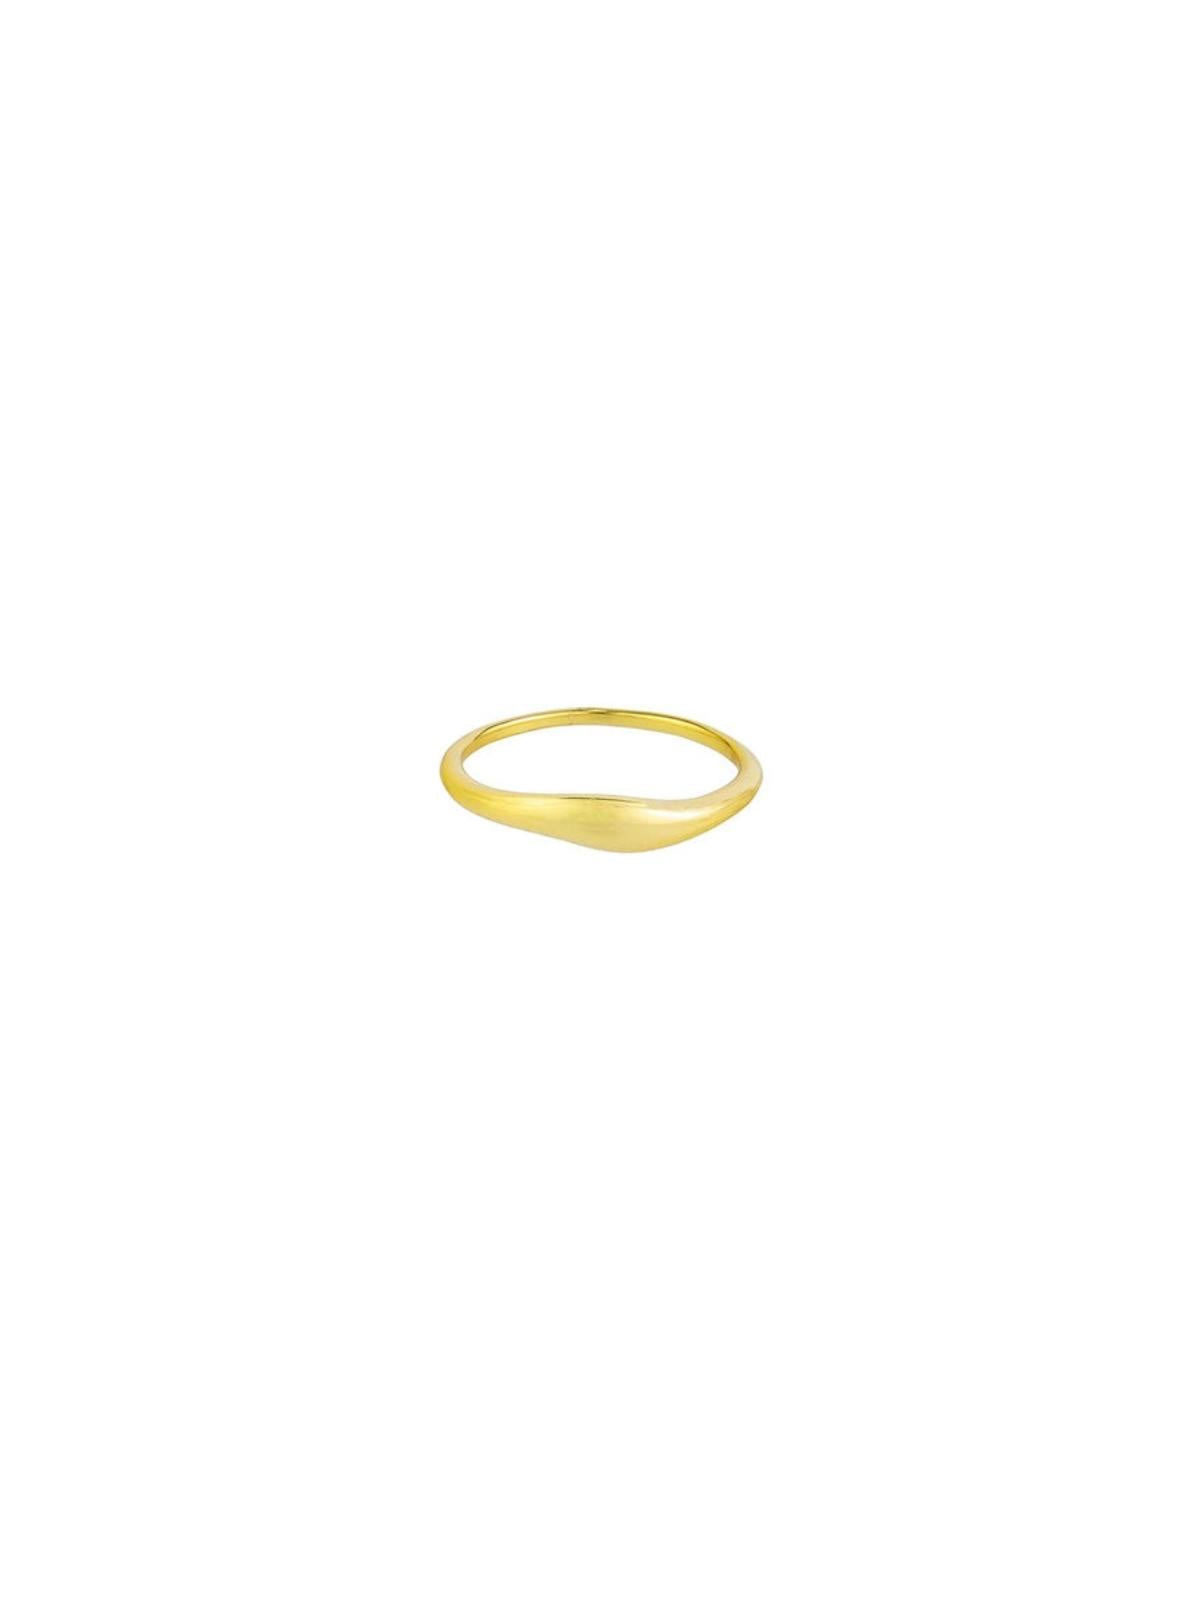 Rosario Ring - Gold Rings Jolie & Deen 